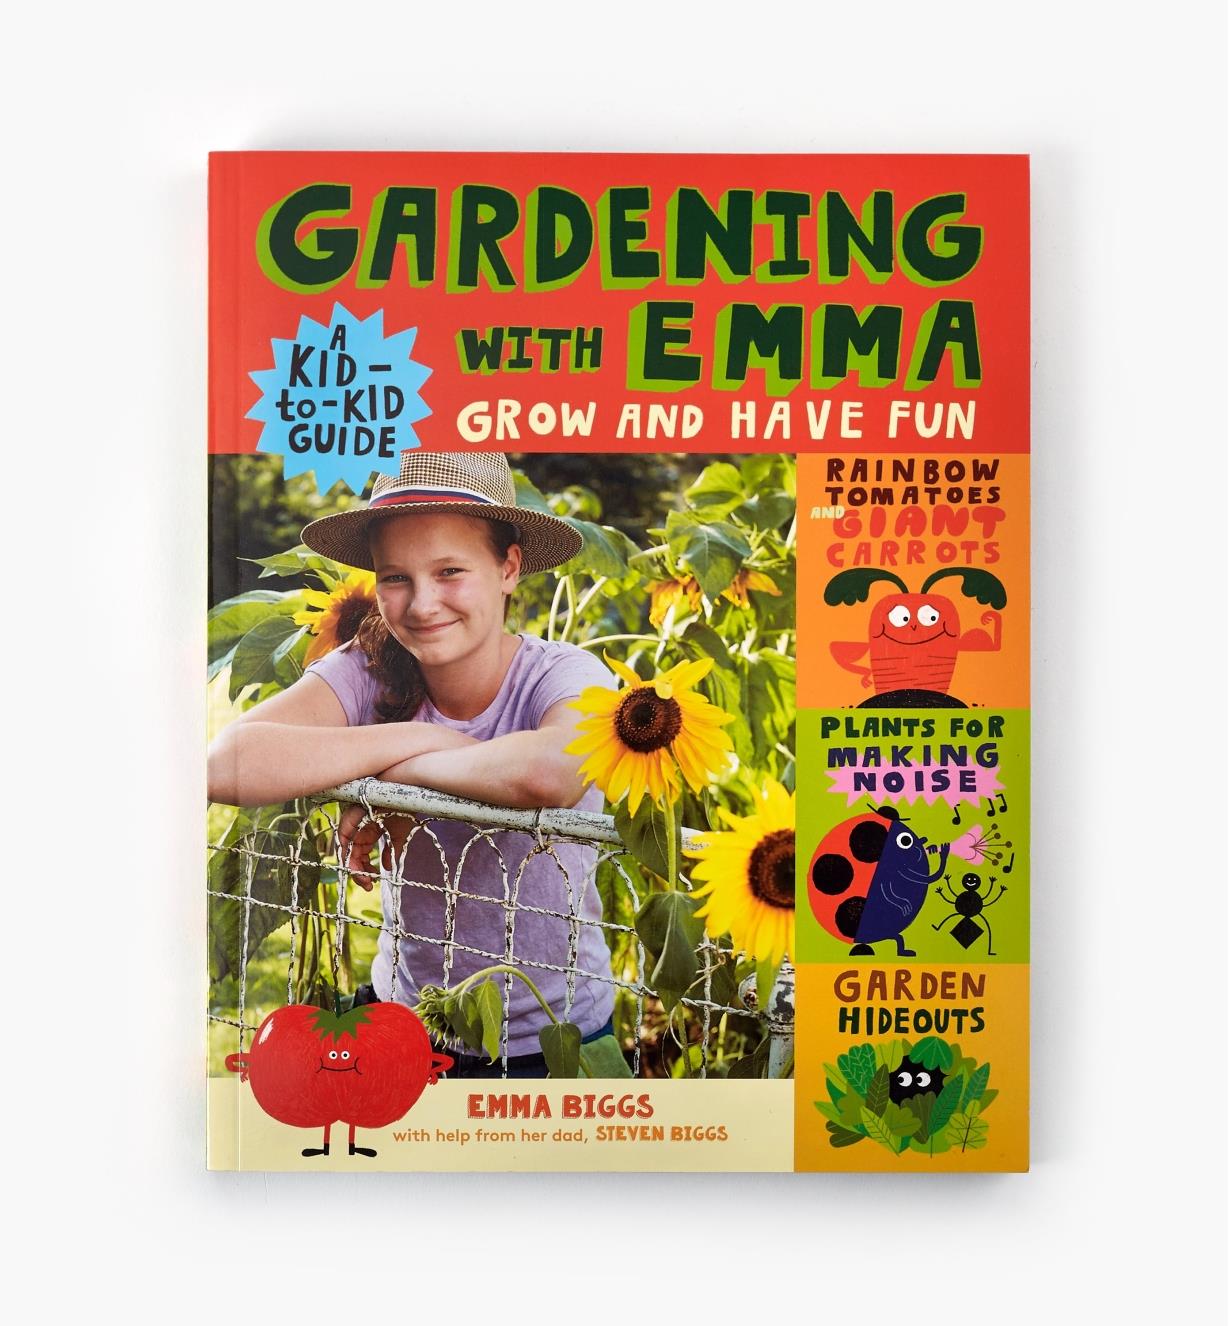 LA971 - Gardening with Emma